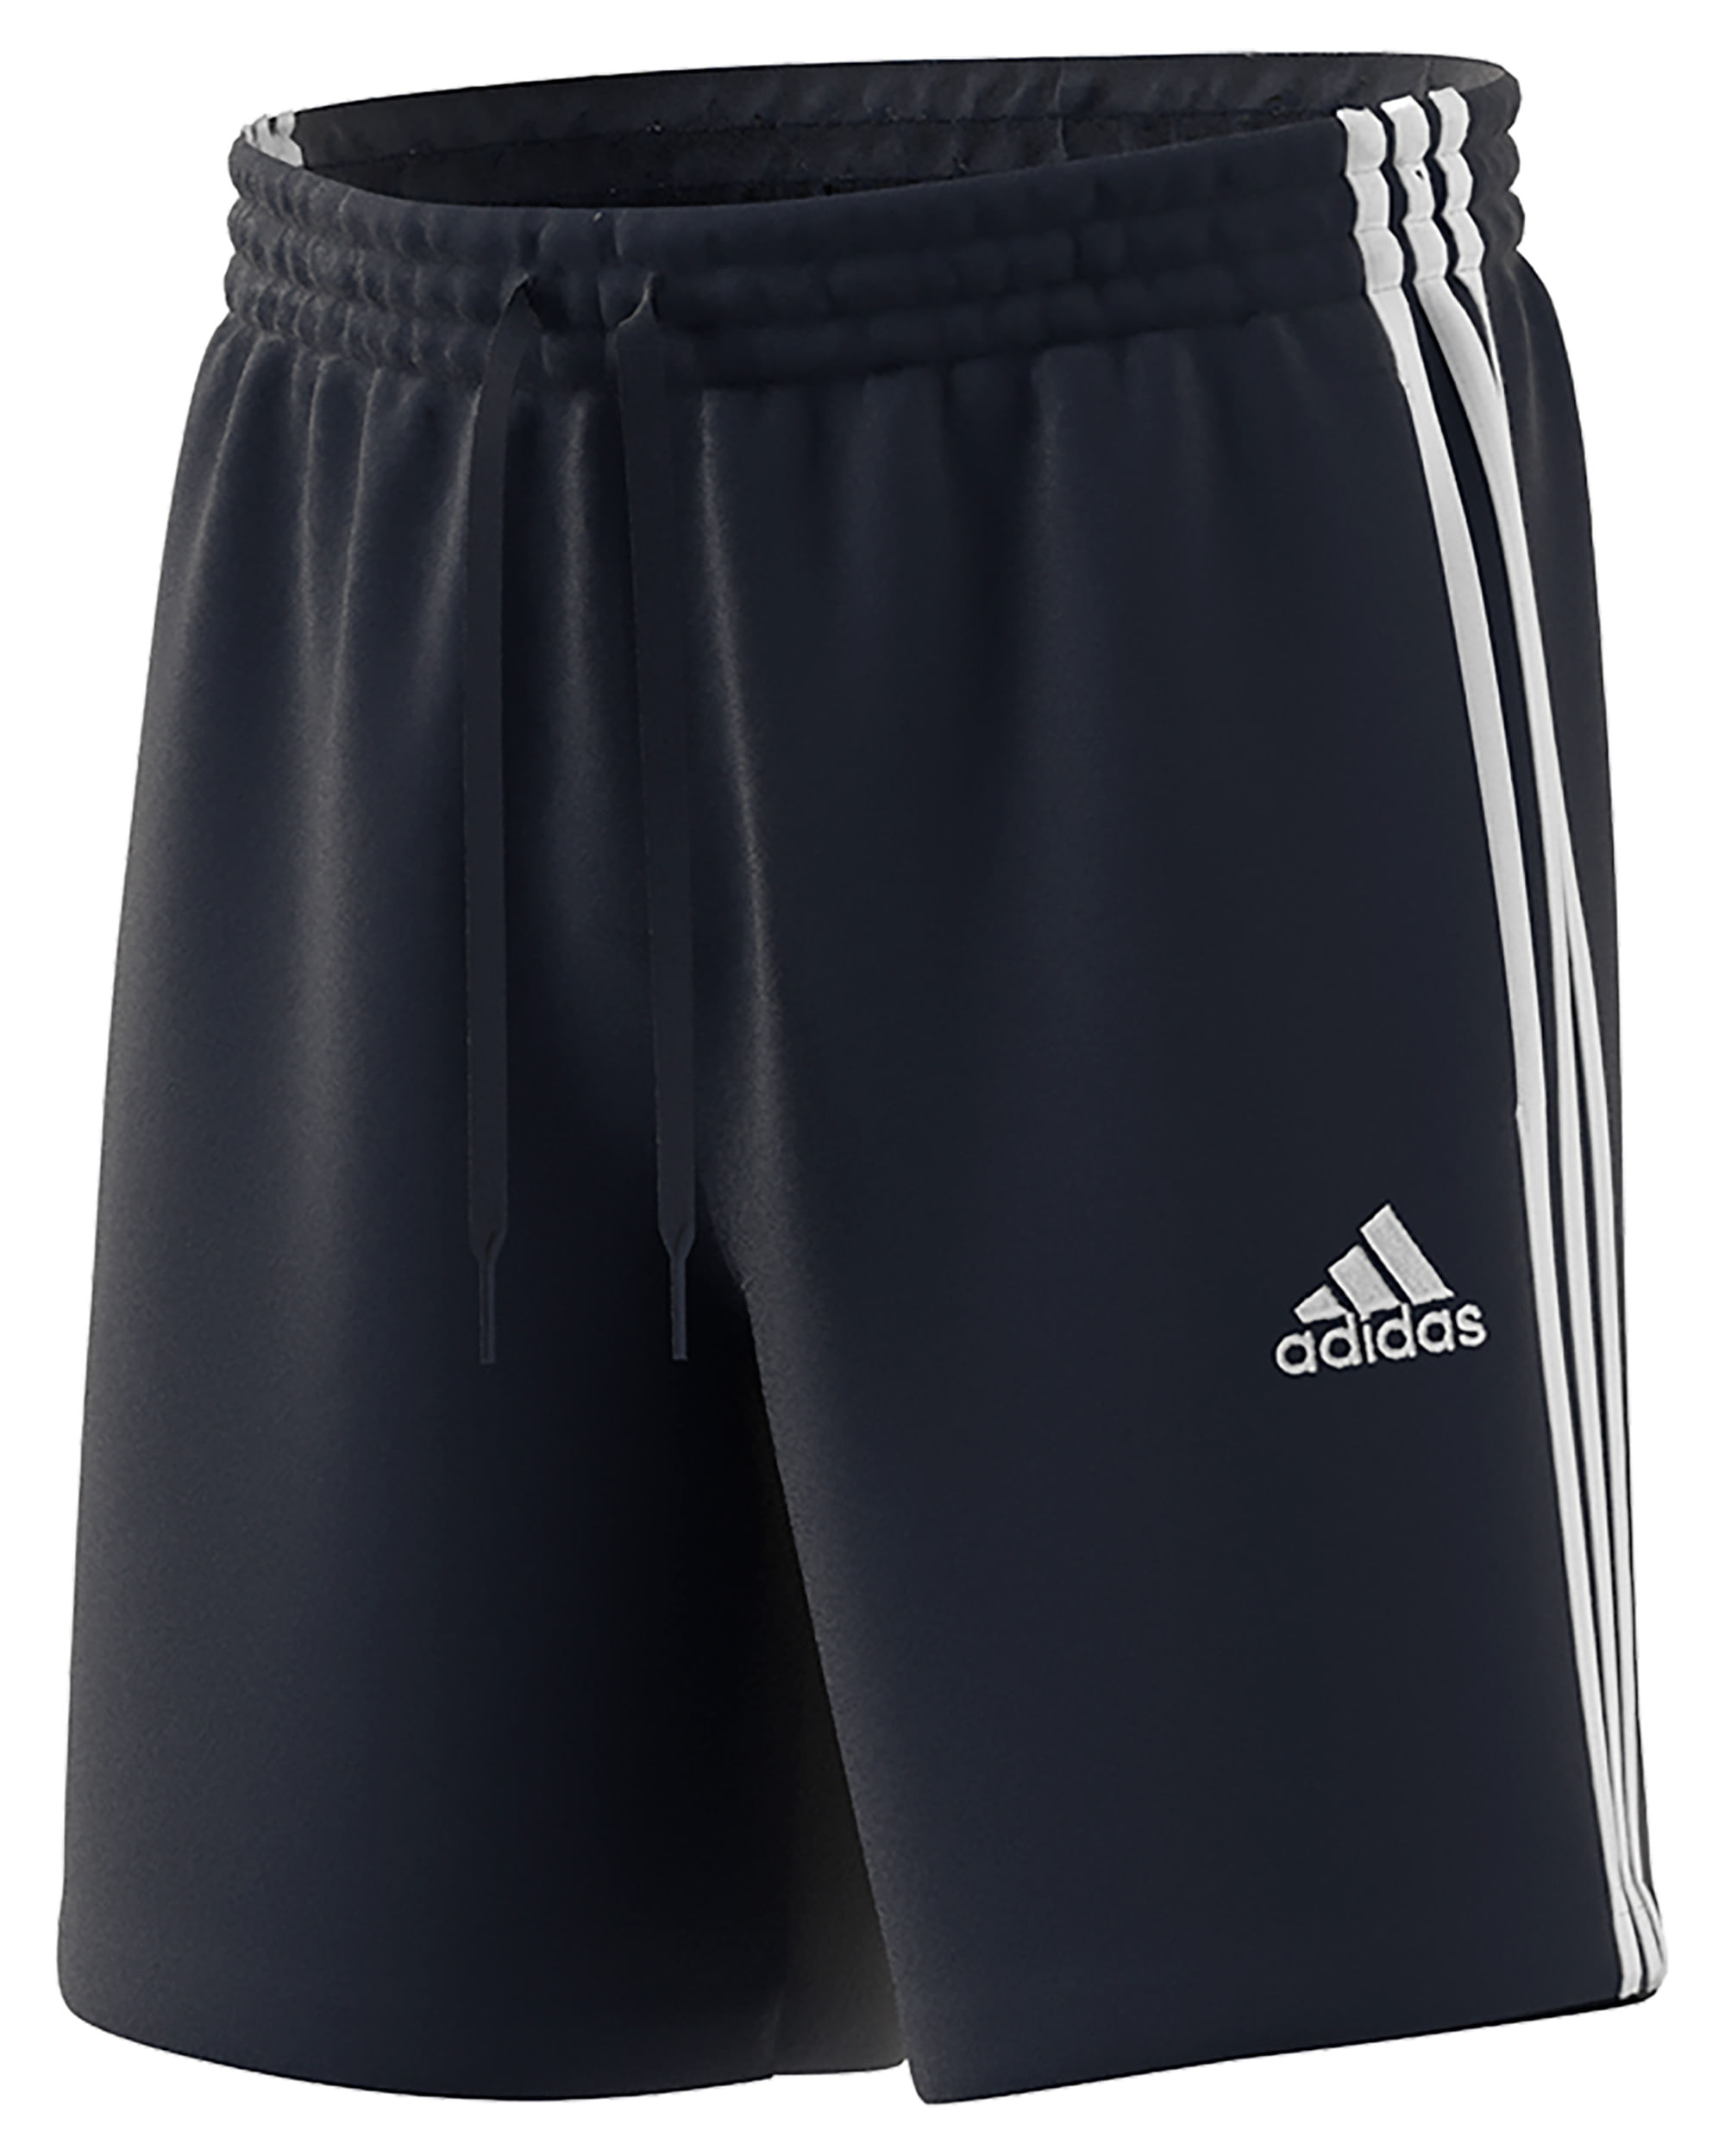 Short Adidas Essentials 3 Listras Masculino - Preto+Branco